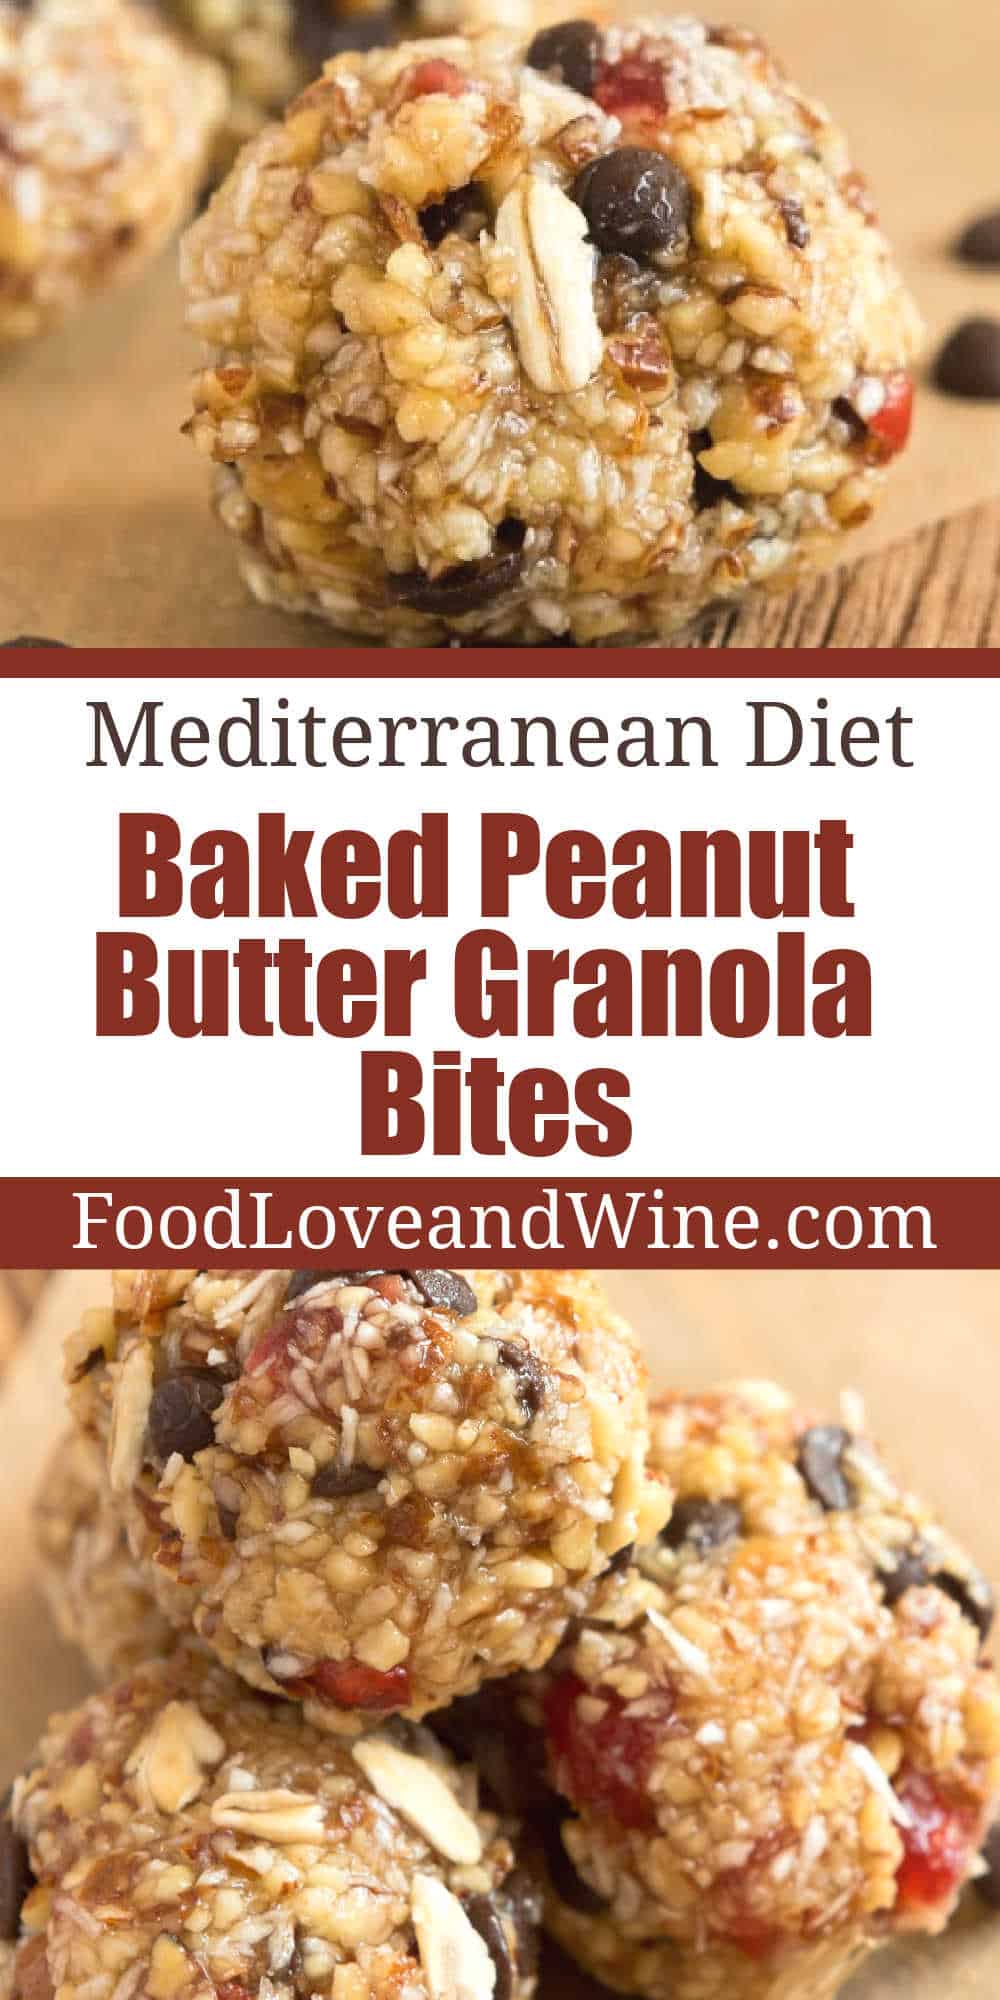 Baked Peanut Butter Granola Bites